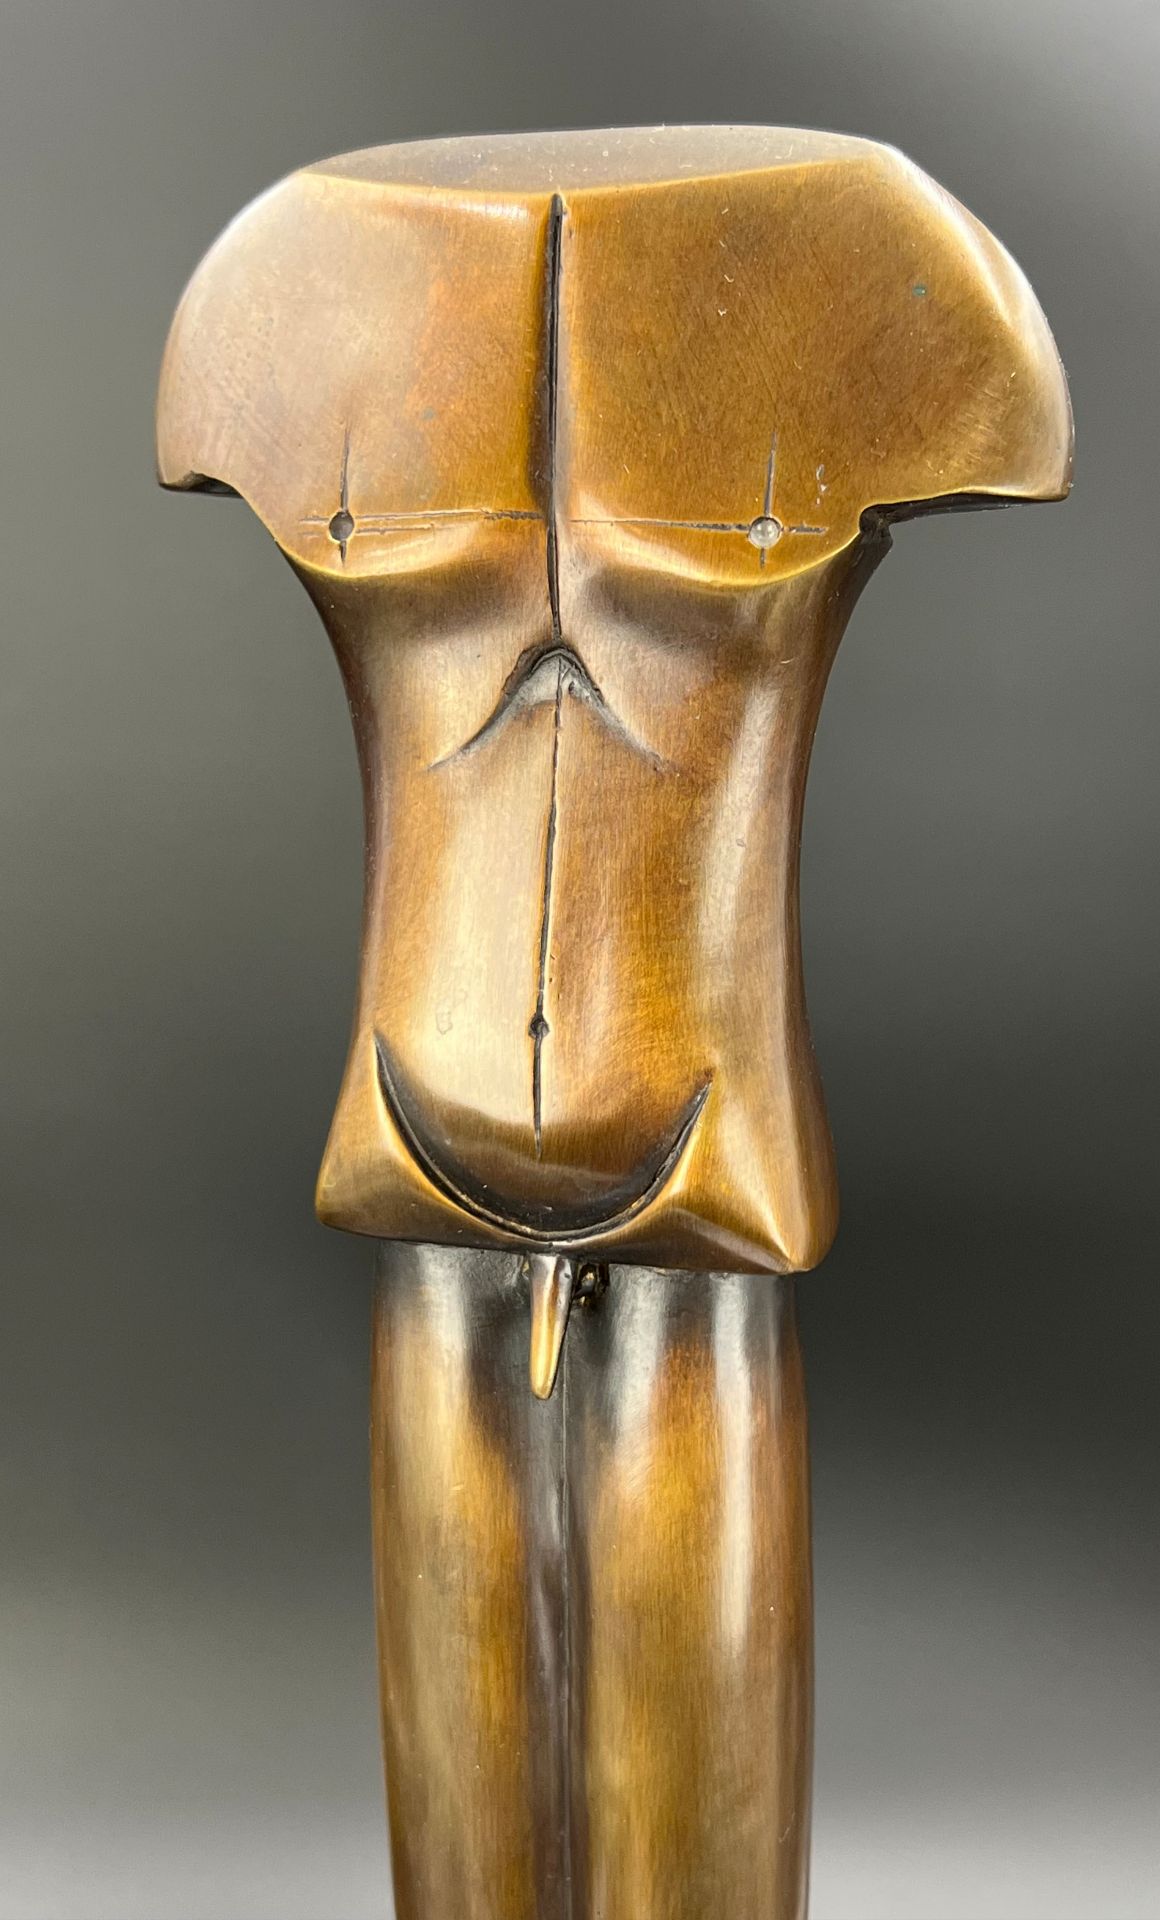 Paul WUNDERLICH (1927 - 2010). Bronze. "Liaison". Man. - Image 6 of 7